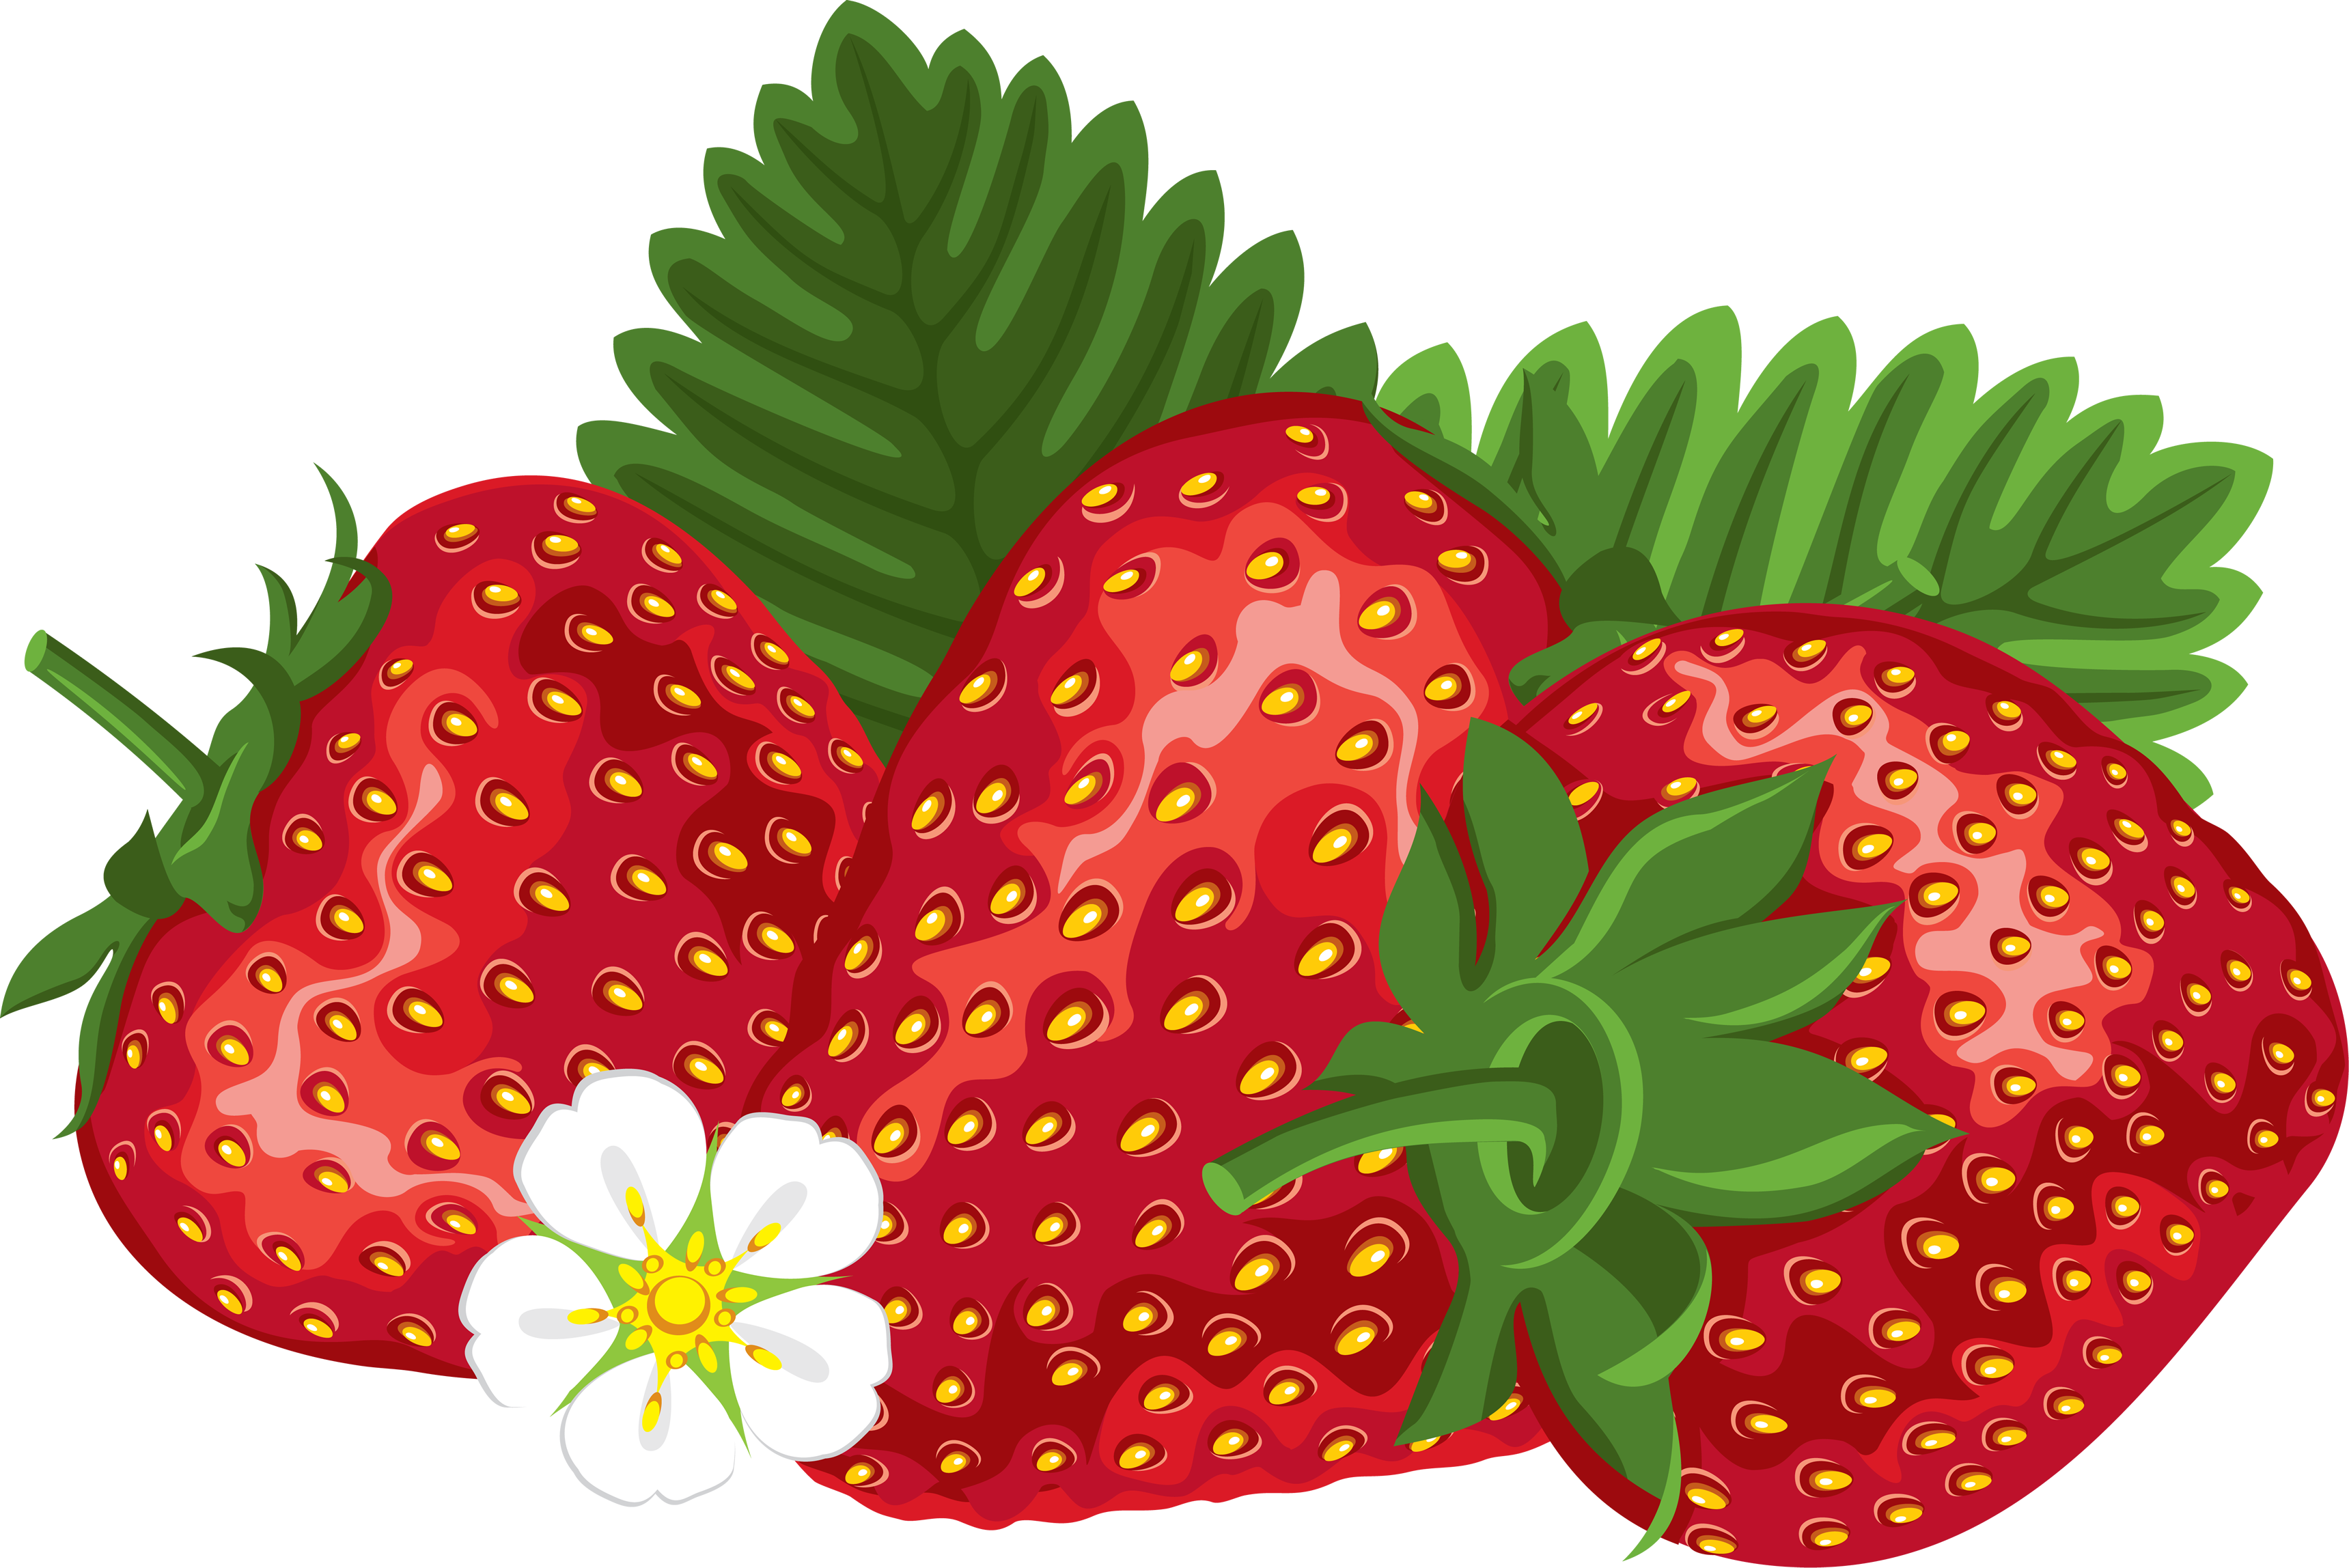 strawberry field clipart - photo #15